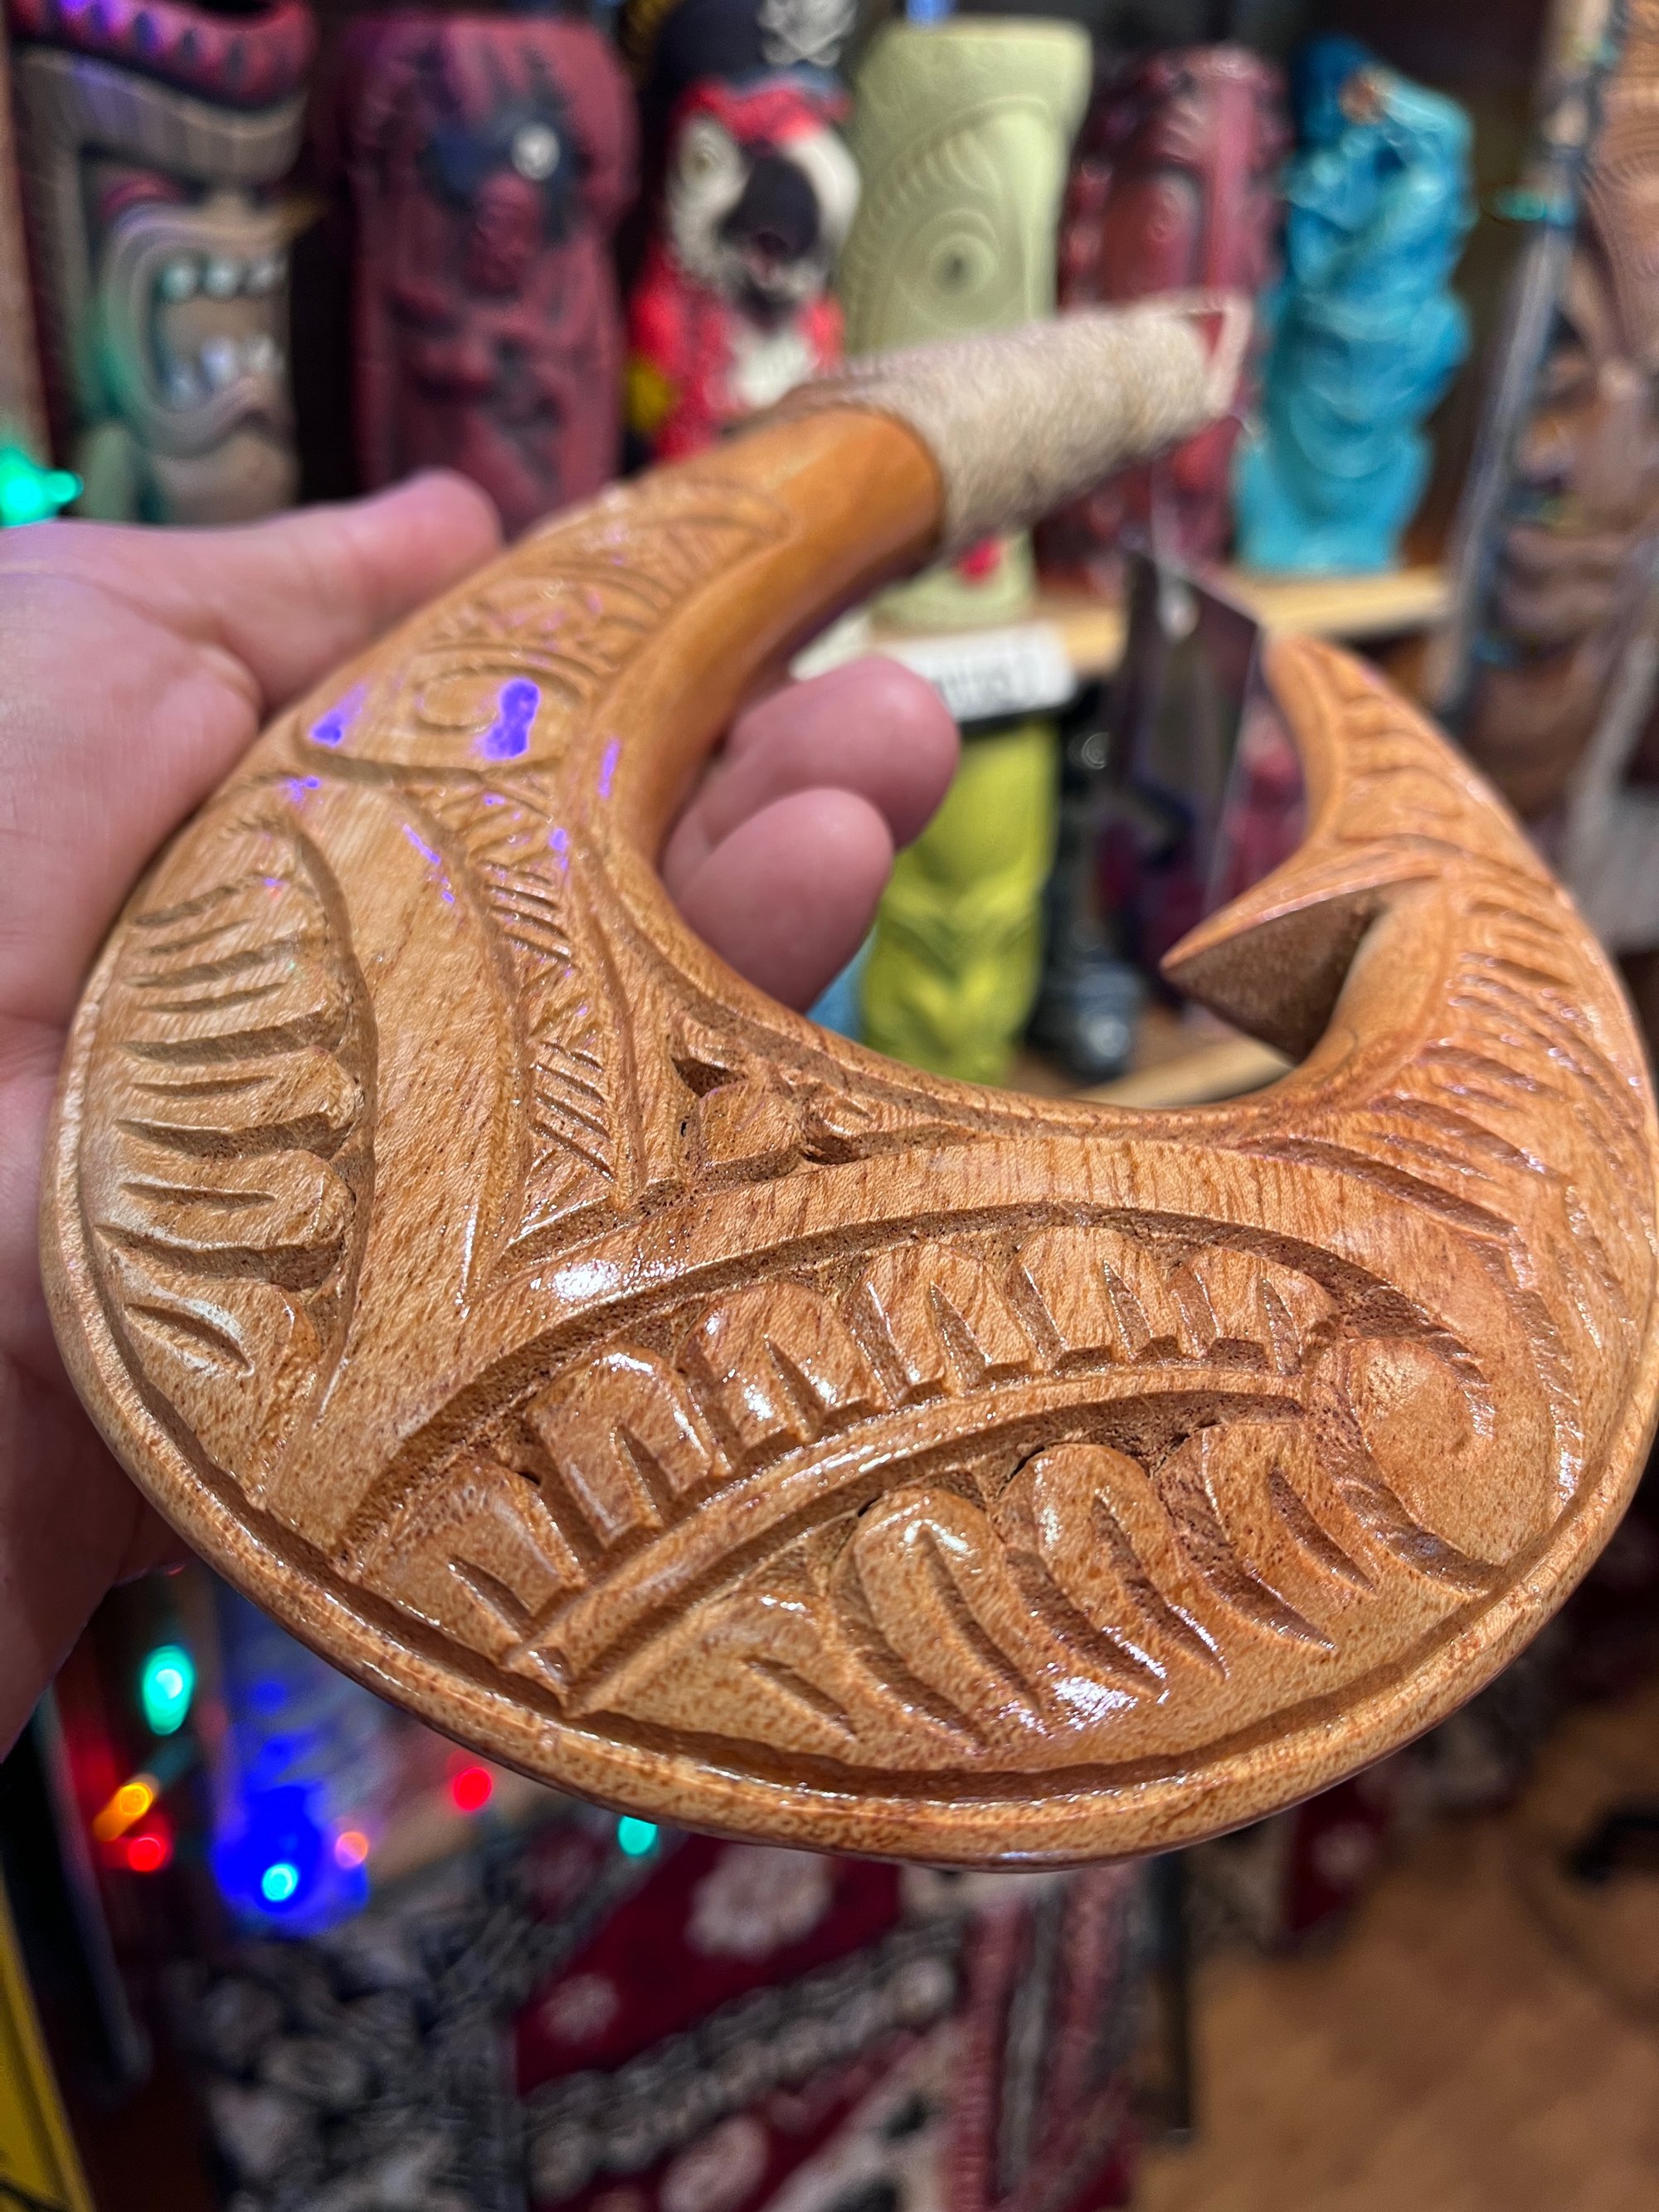 Hawaiian Maui Makau Traditional Native Fish Hook Necklace Pendant. Wood and  Bone Carved. -  Canada